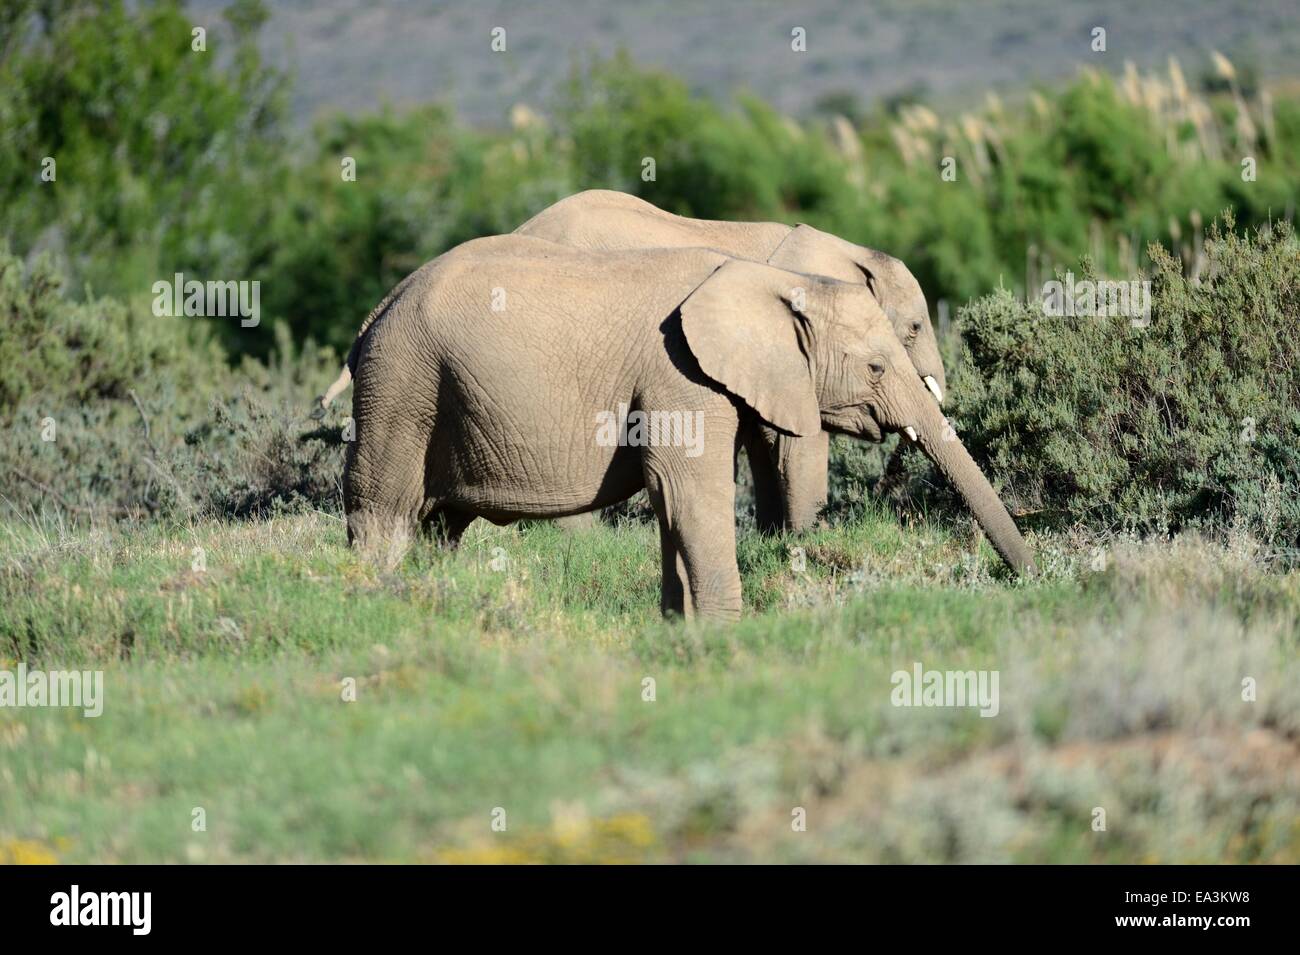 A shot of an Elephant while on safari Stock Photo